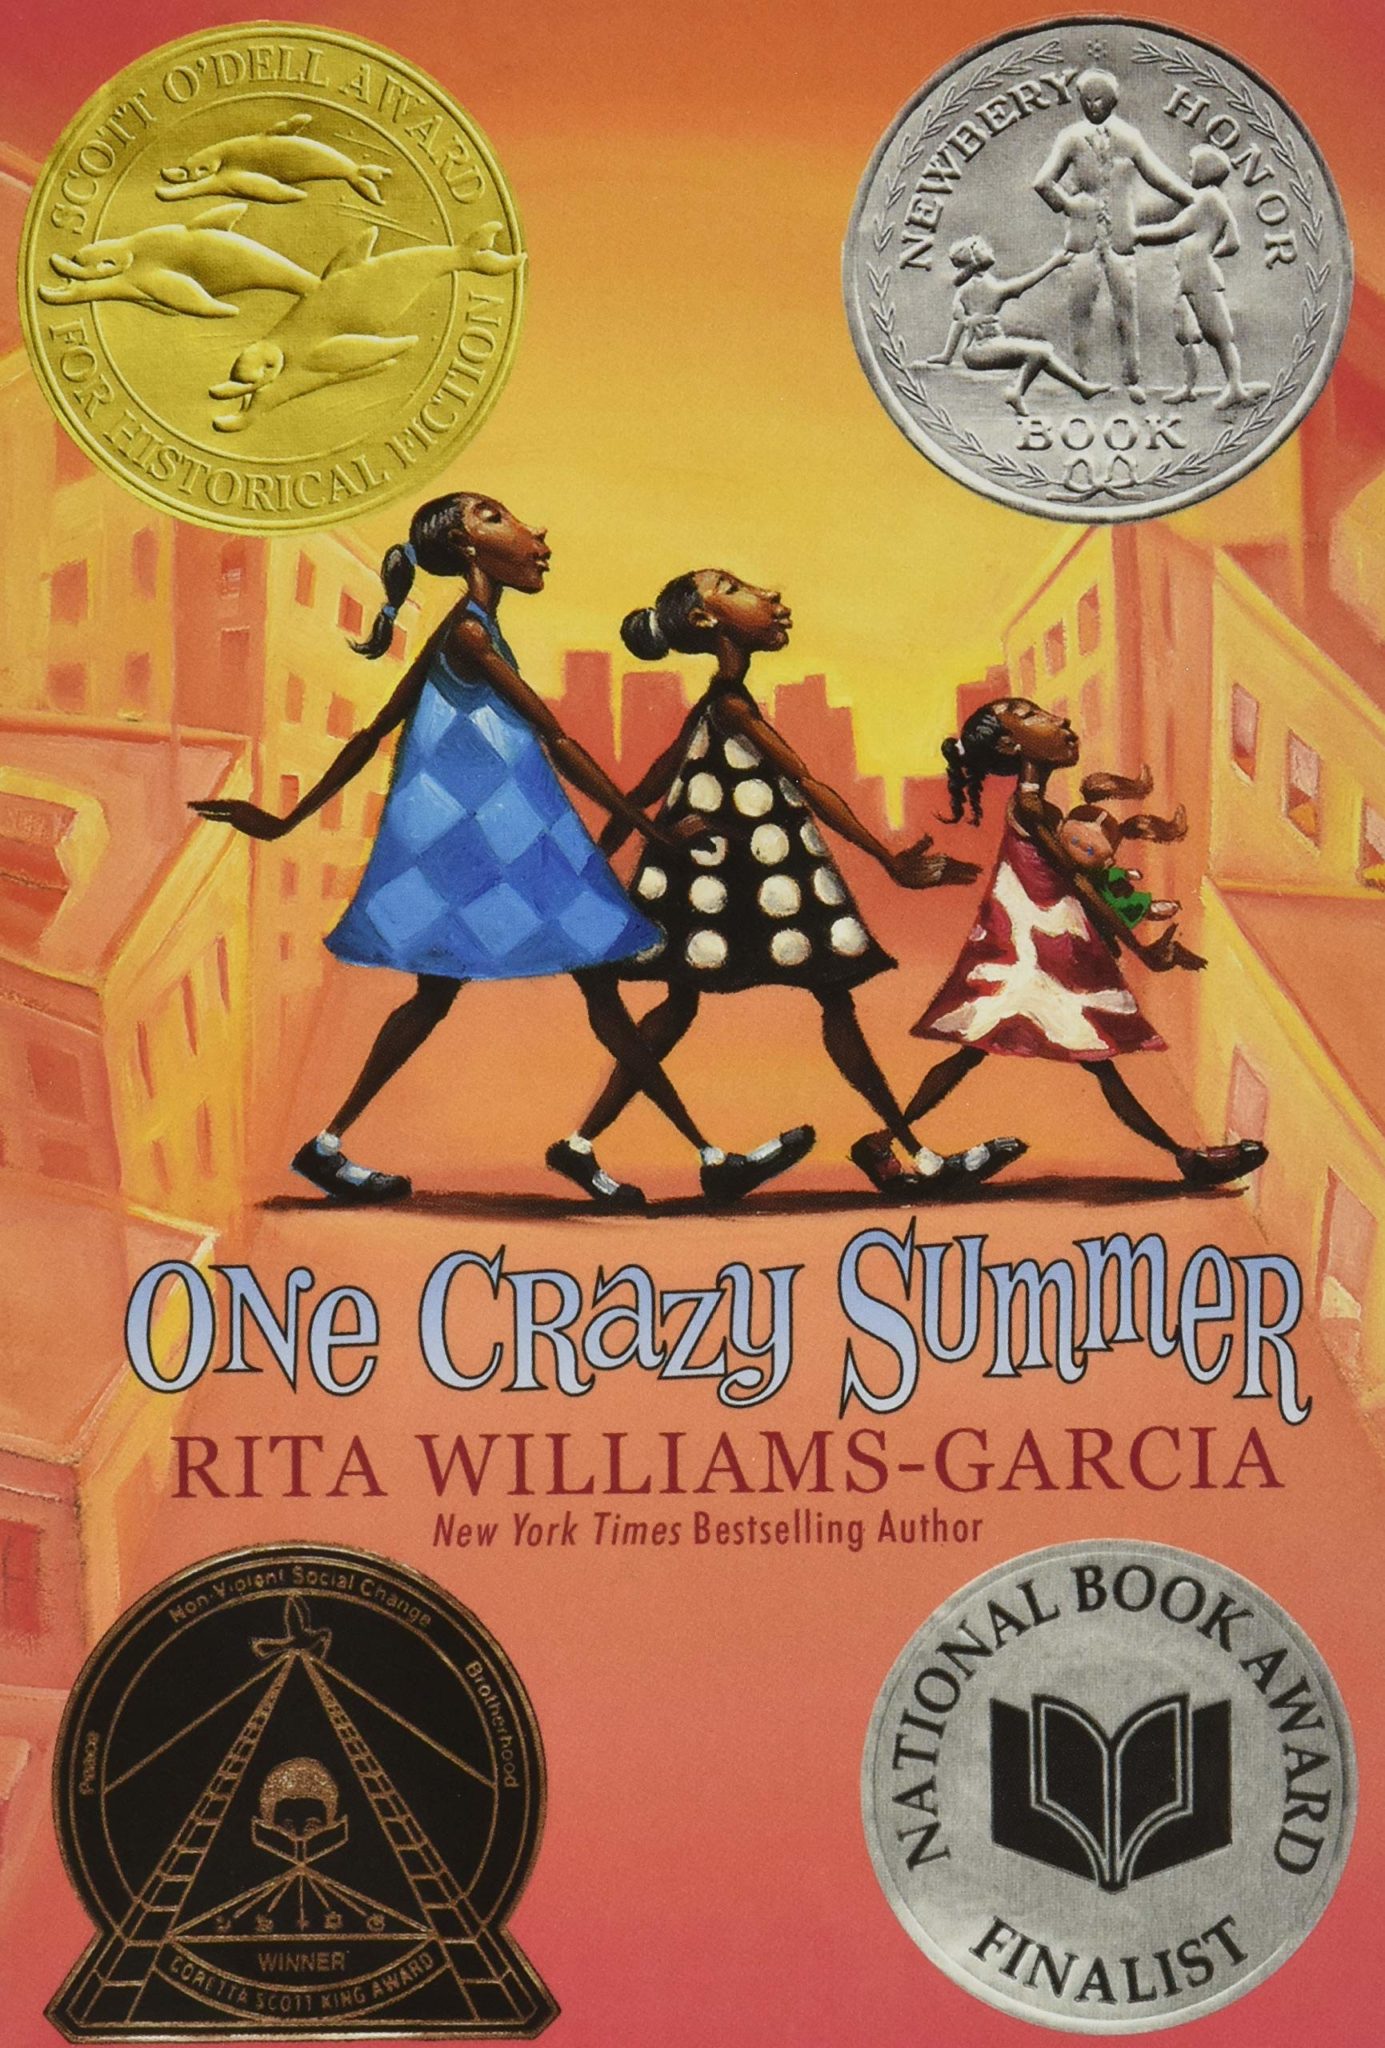 "One Crazy Summer" by Rita Williams-Garcia book cover